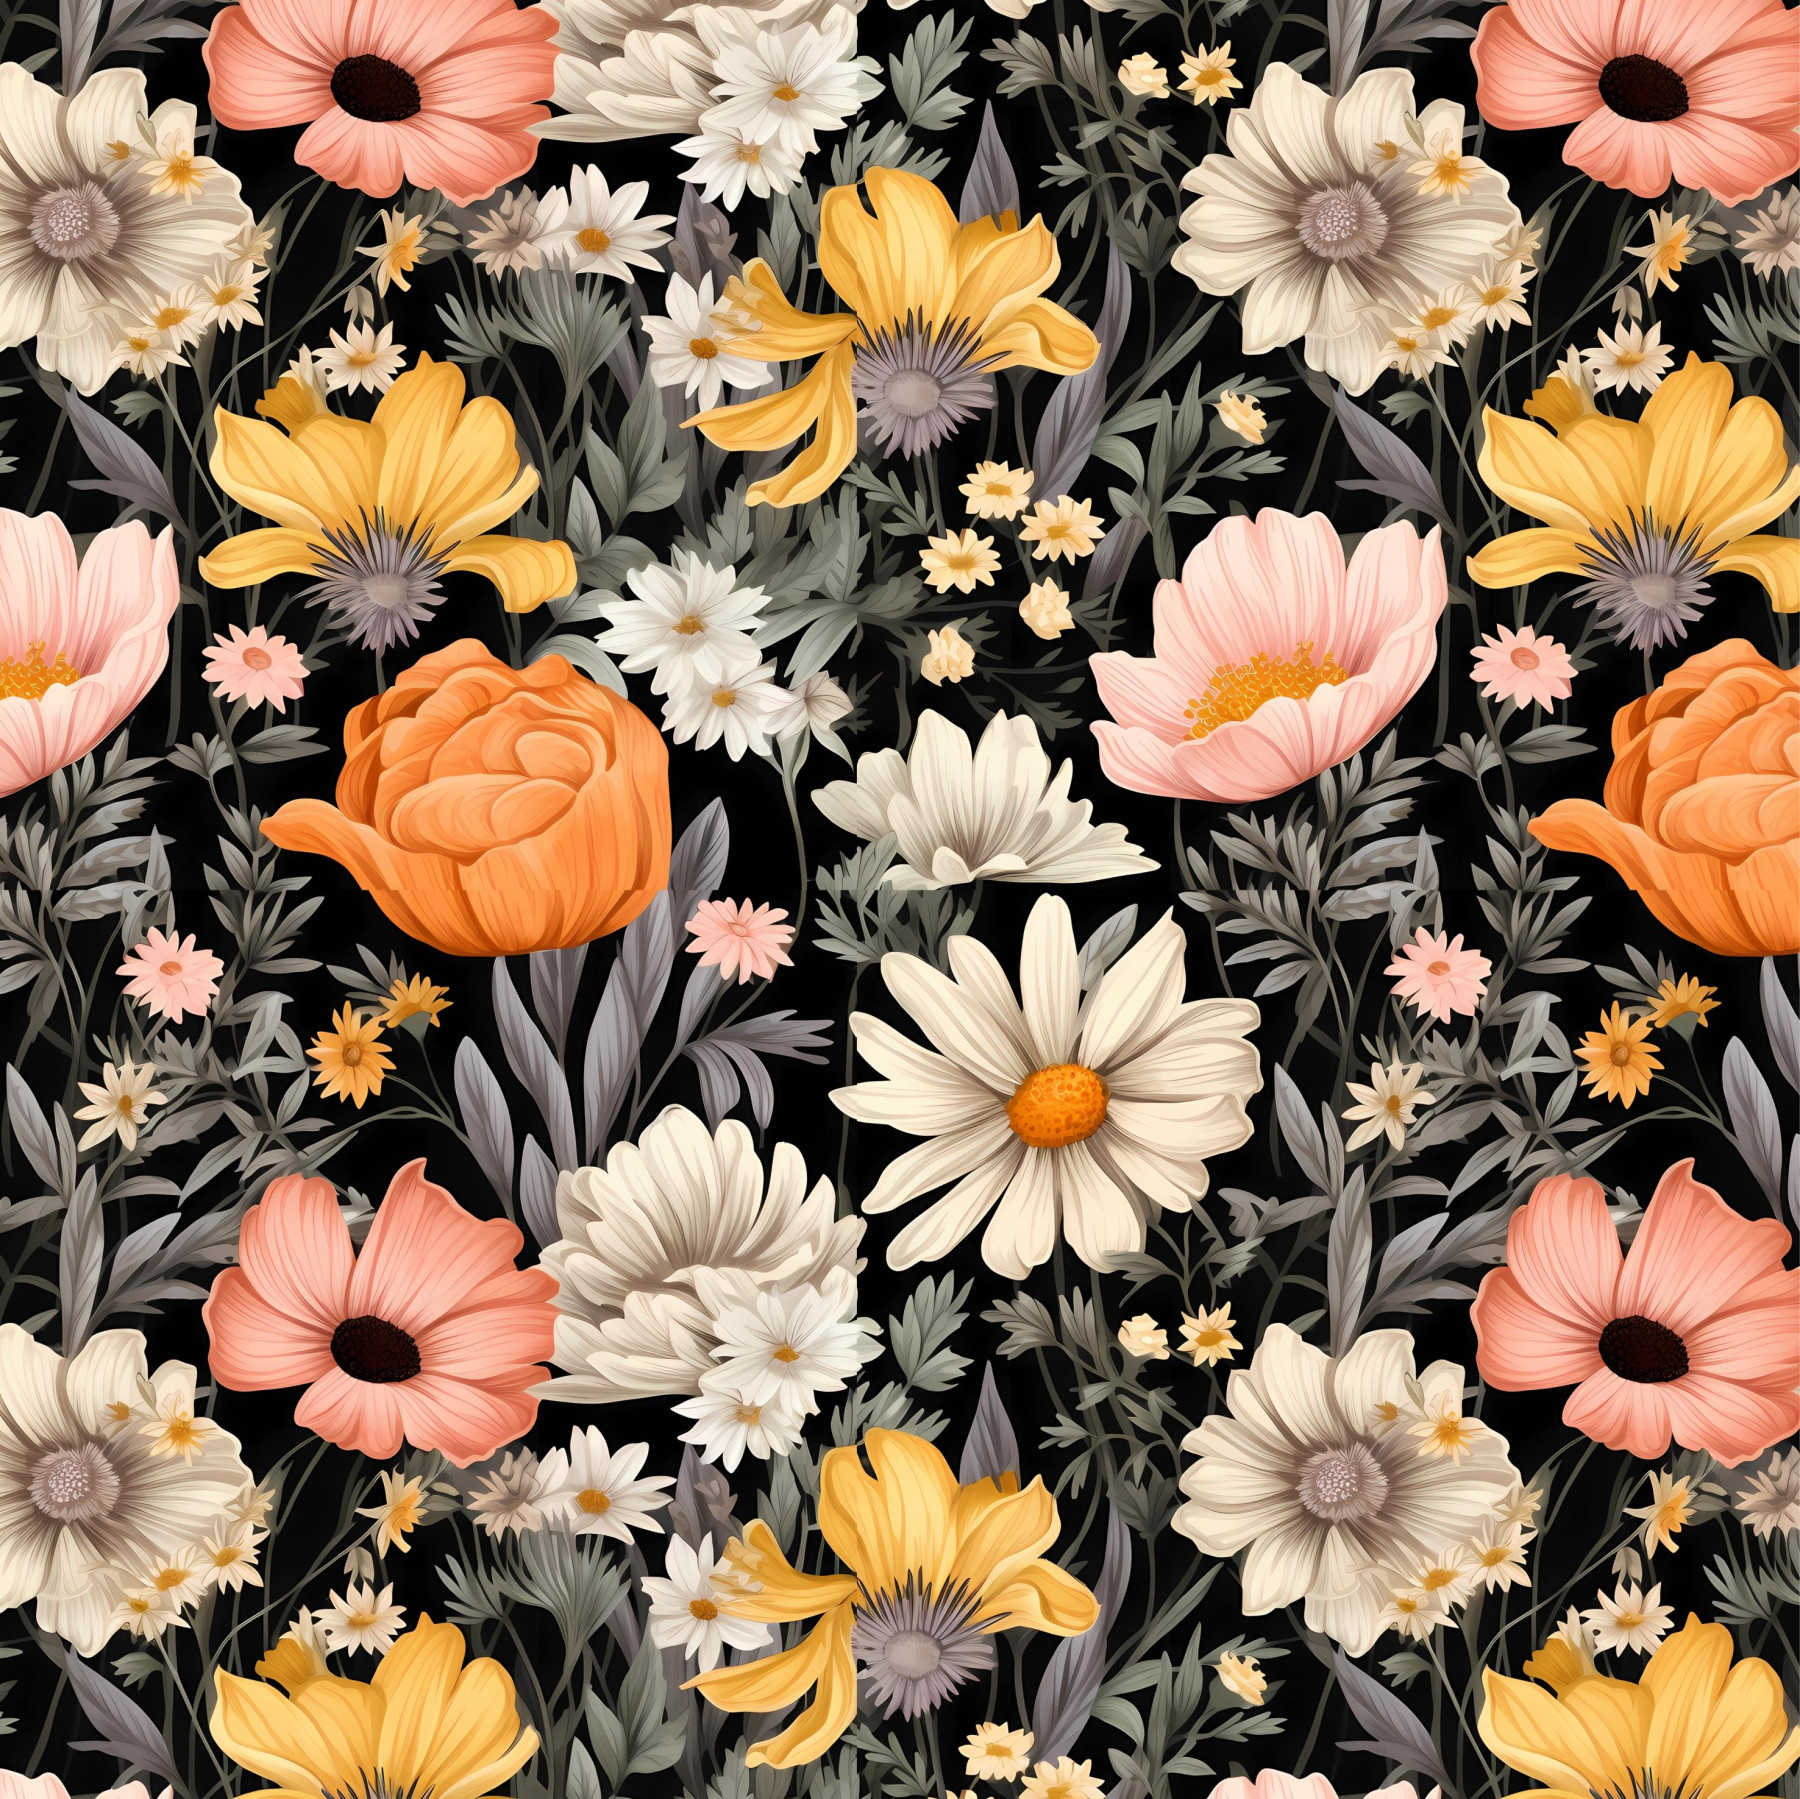 FLOWERS wz.6 - Cotton woven fabric